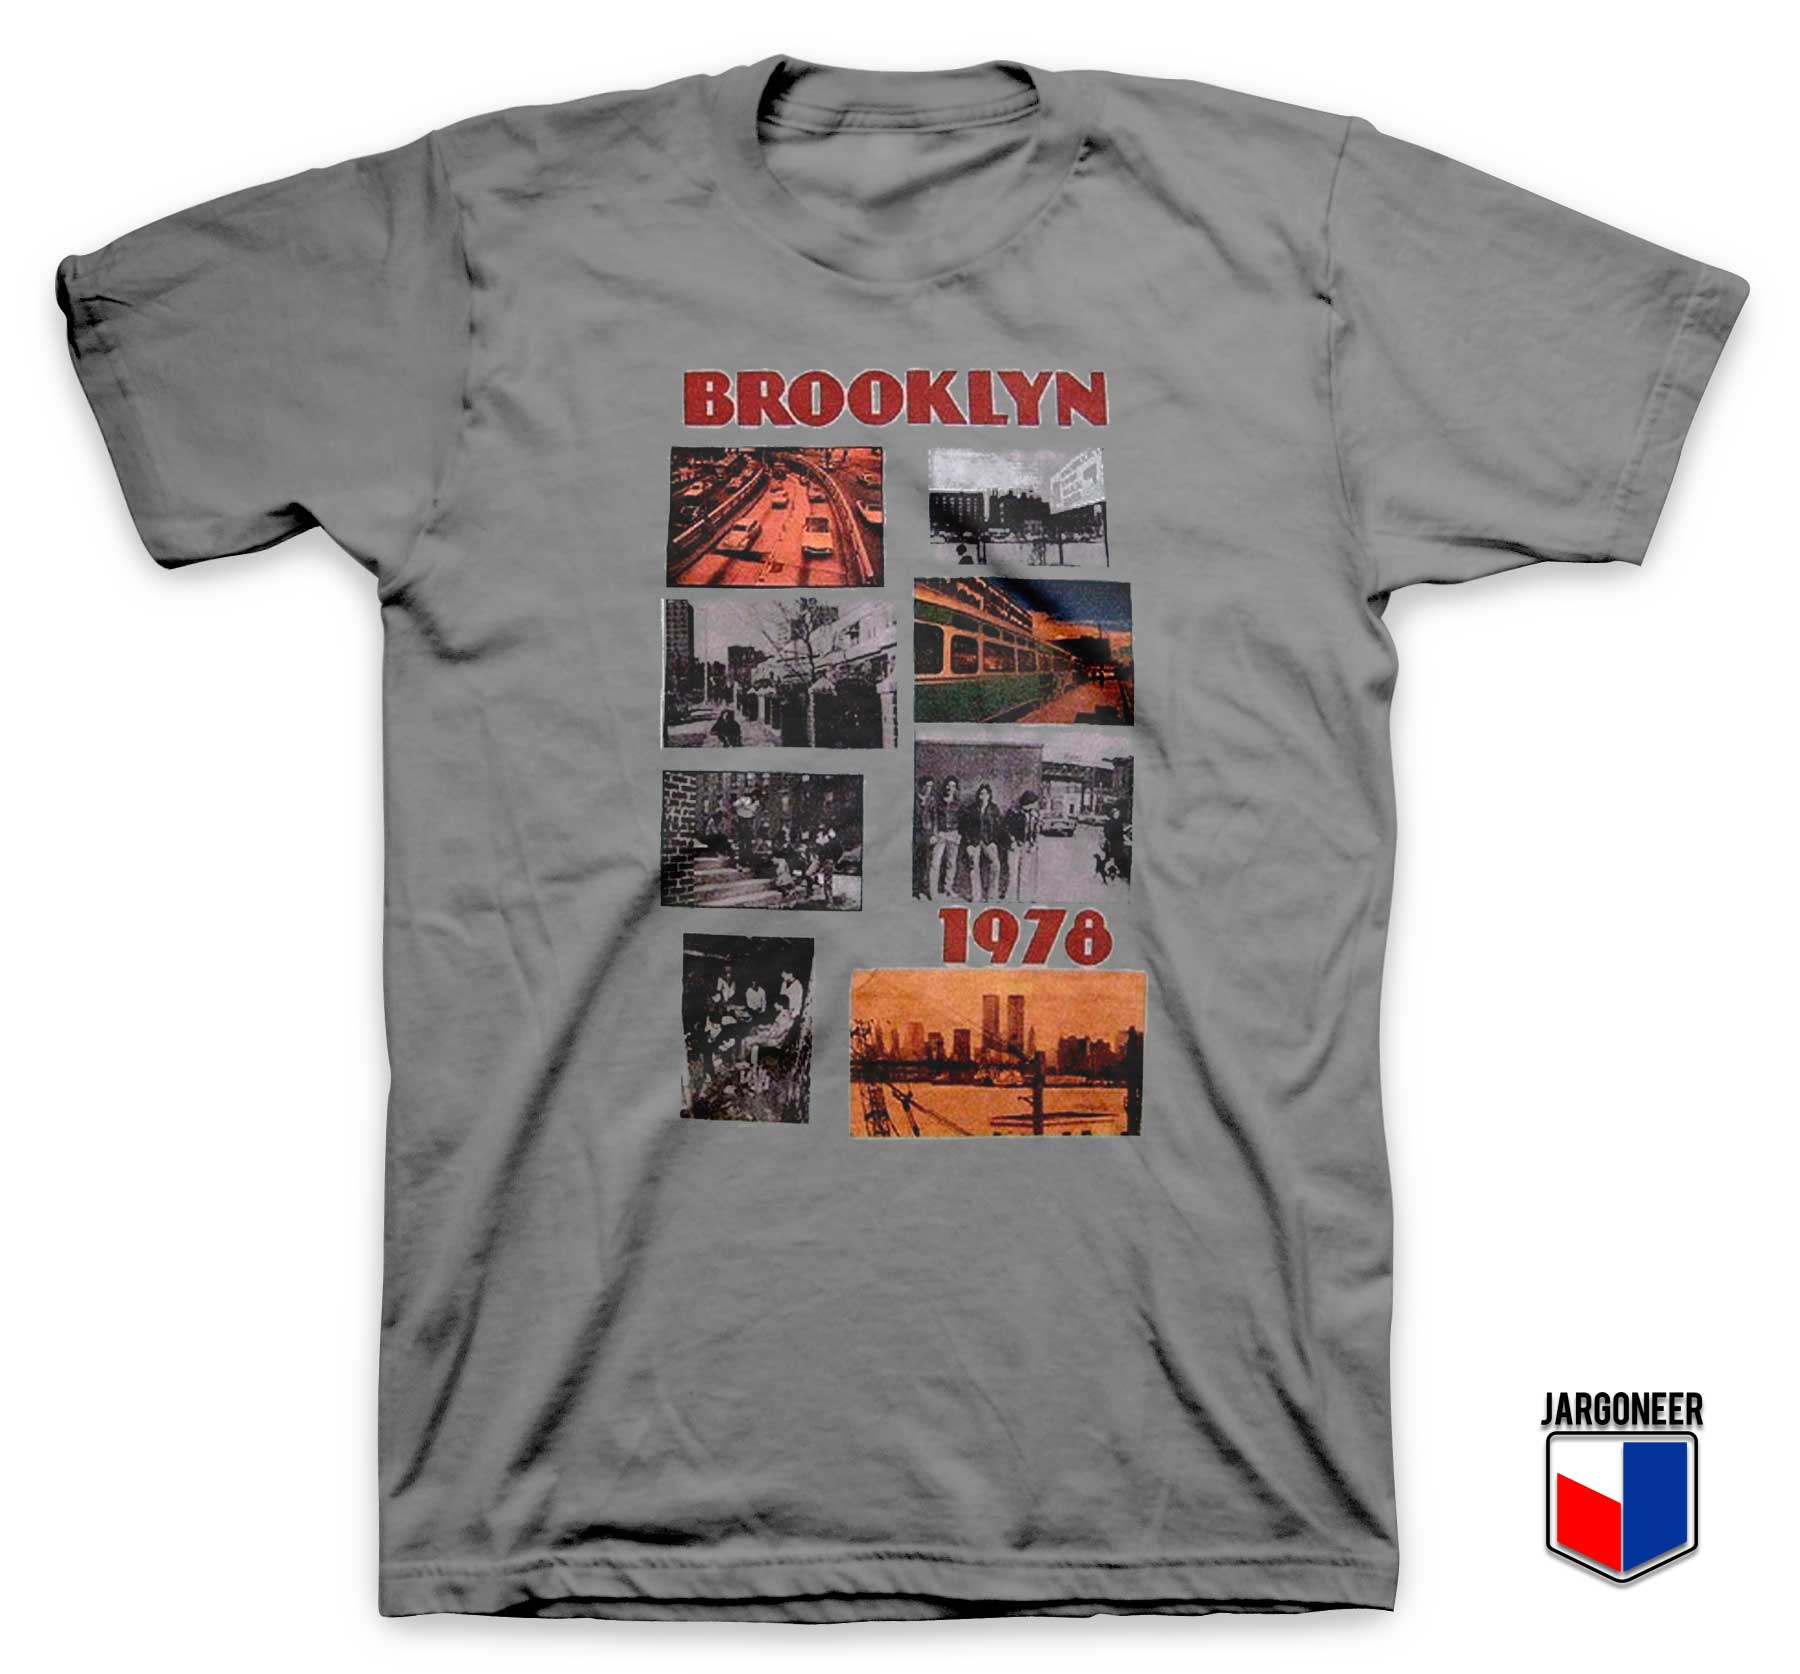 Brooklyn Style 197 T Shirt - Shop Unique Graphic Cool Shirt Designs